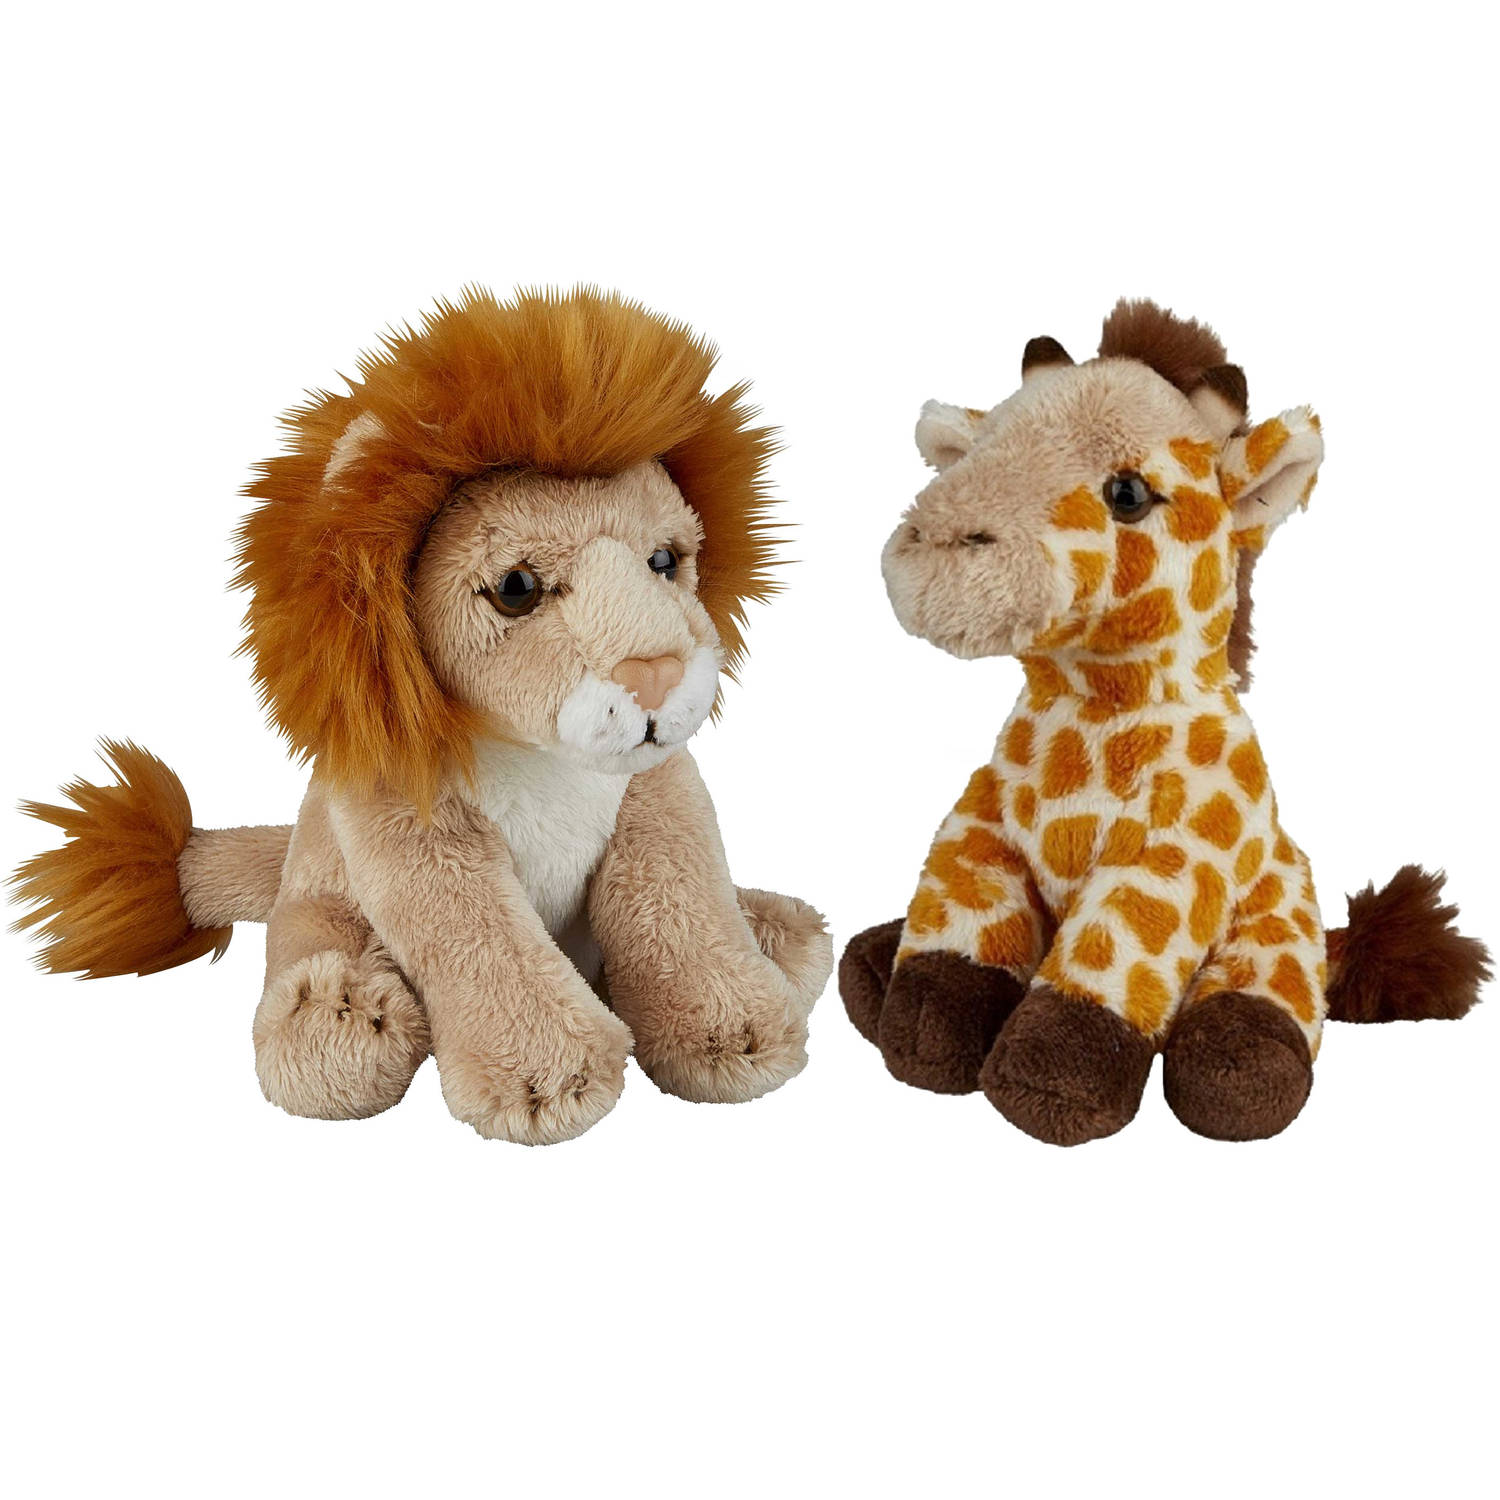 Safari Dieren Serie Pluche Knuffels 2x Stuks Giraffe En Leeuw Van 15 Cm Knuffeldier